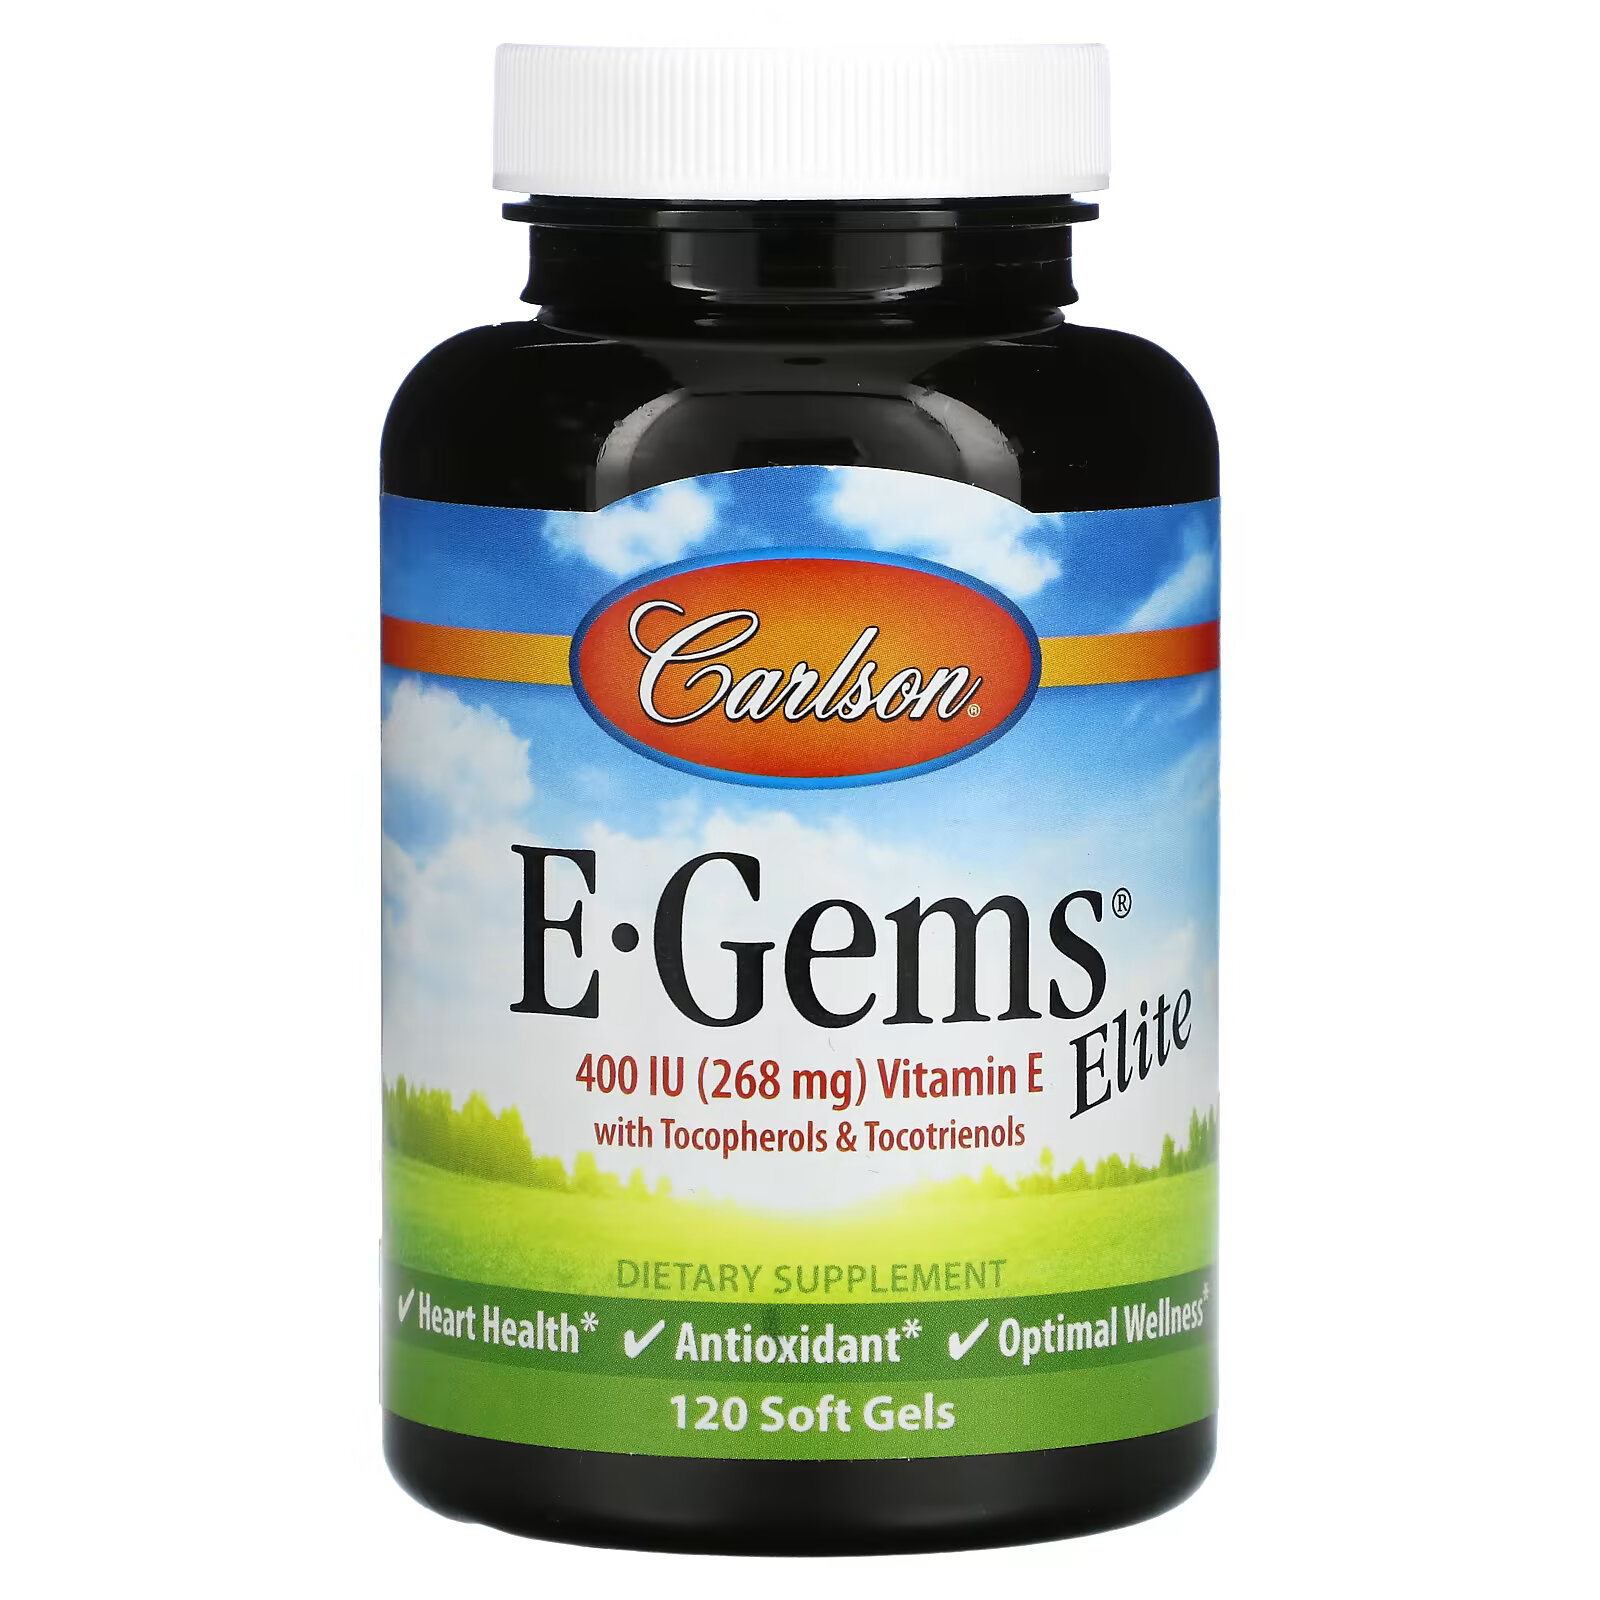 Carlson, E-Gems Elite, витамин E, 268 мг (400 МЕ), 120 мягких таблеток